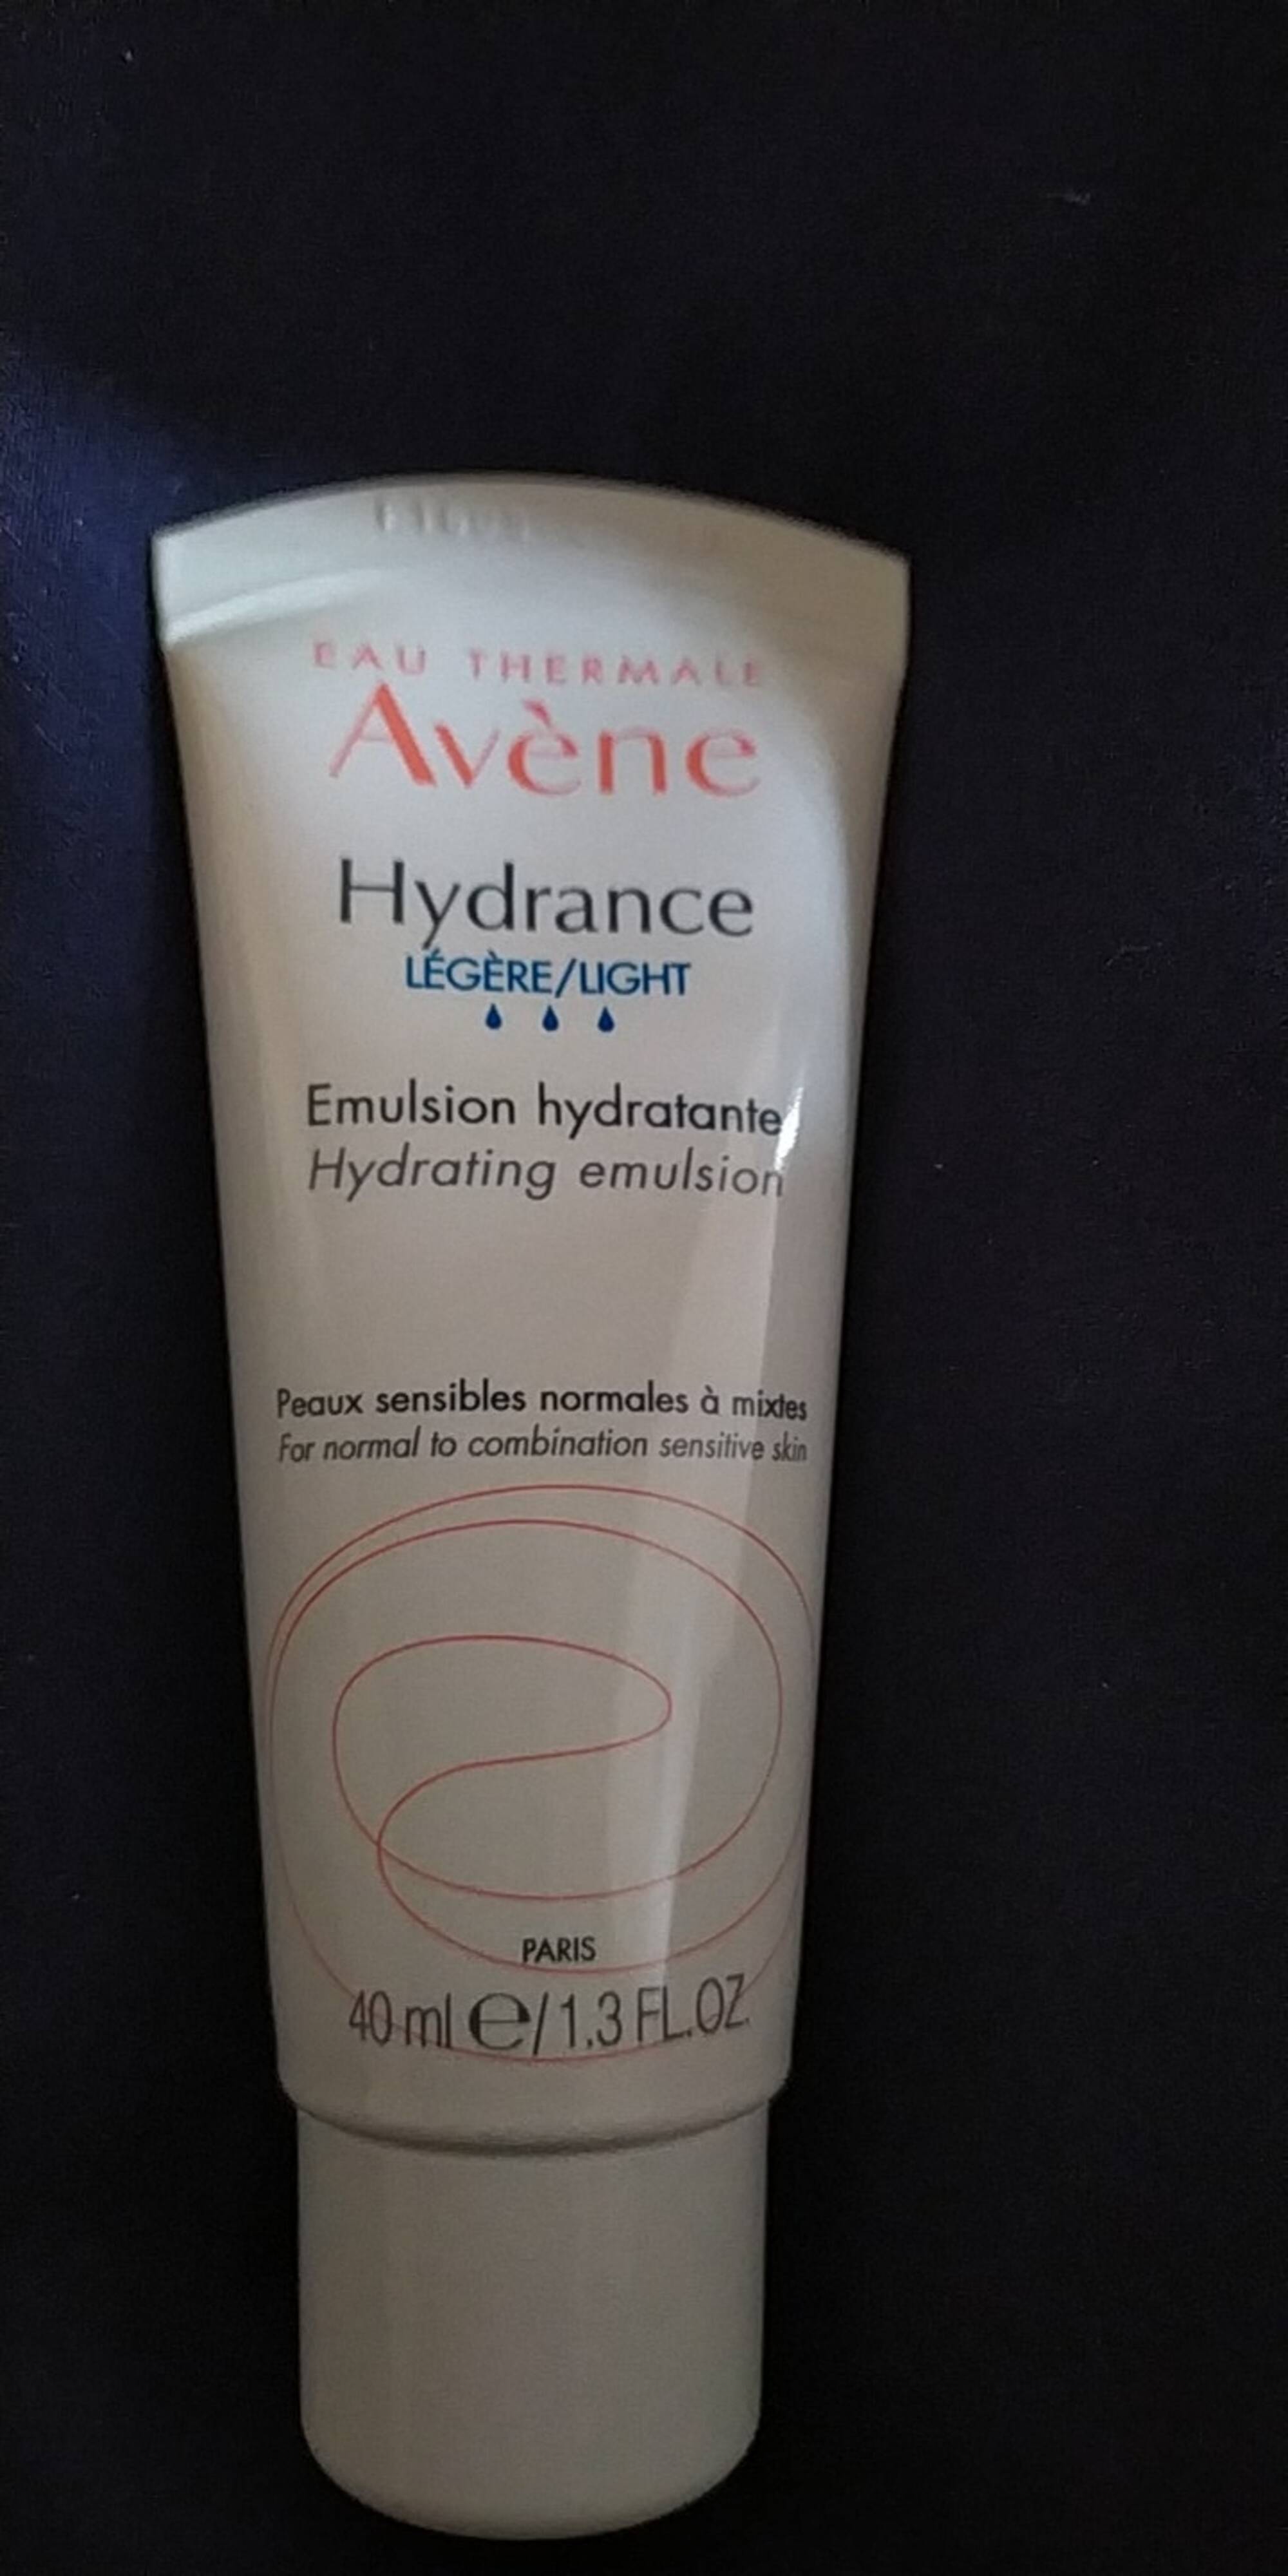 AVÈNE - Hydrance - Emulsion hydratante